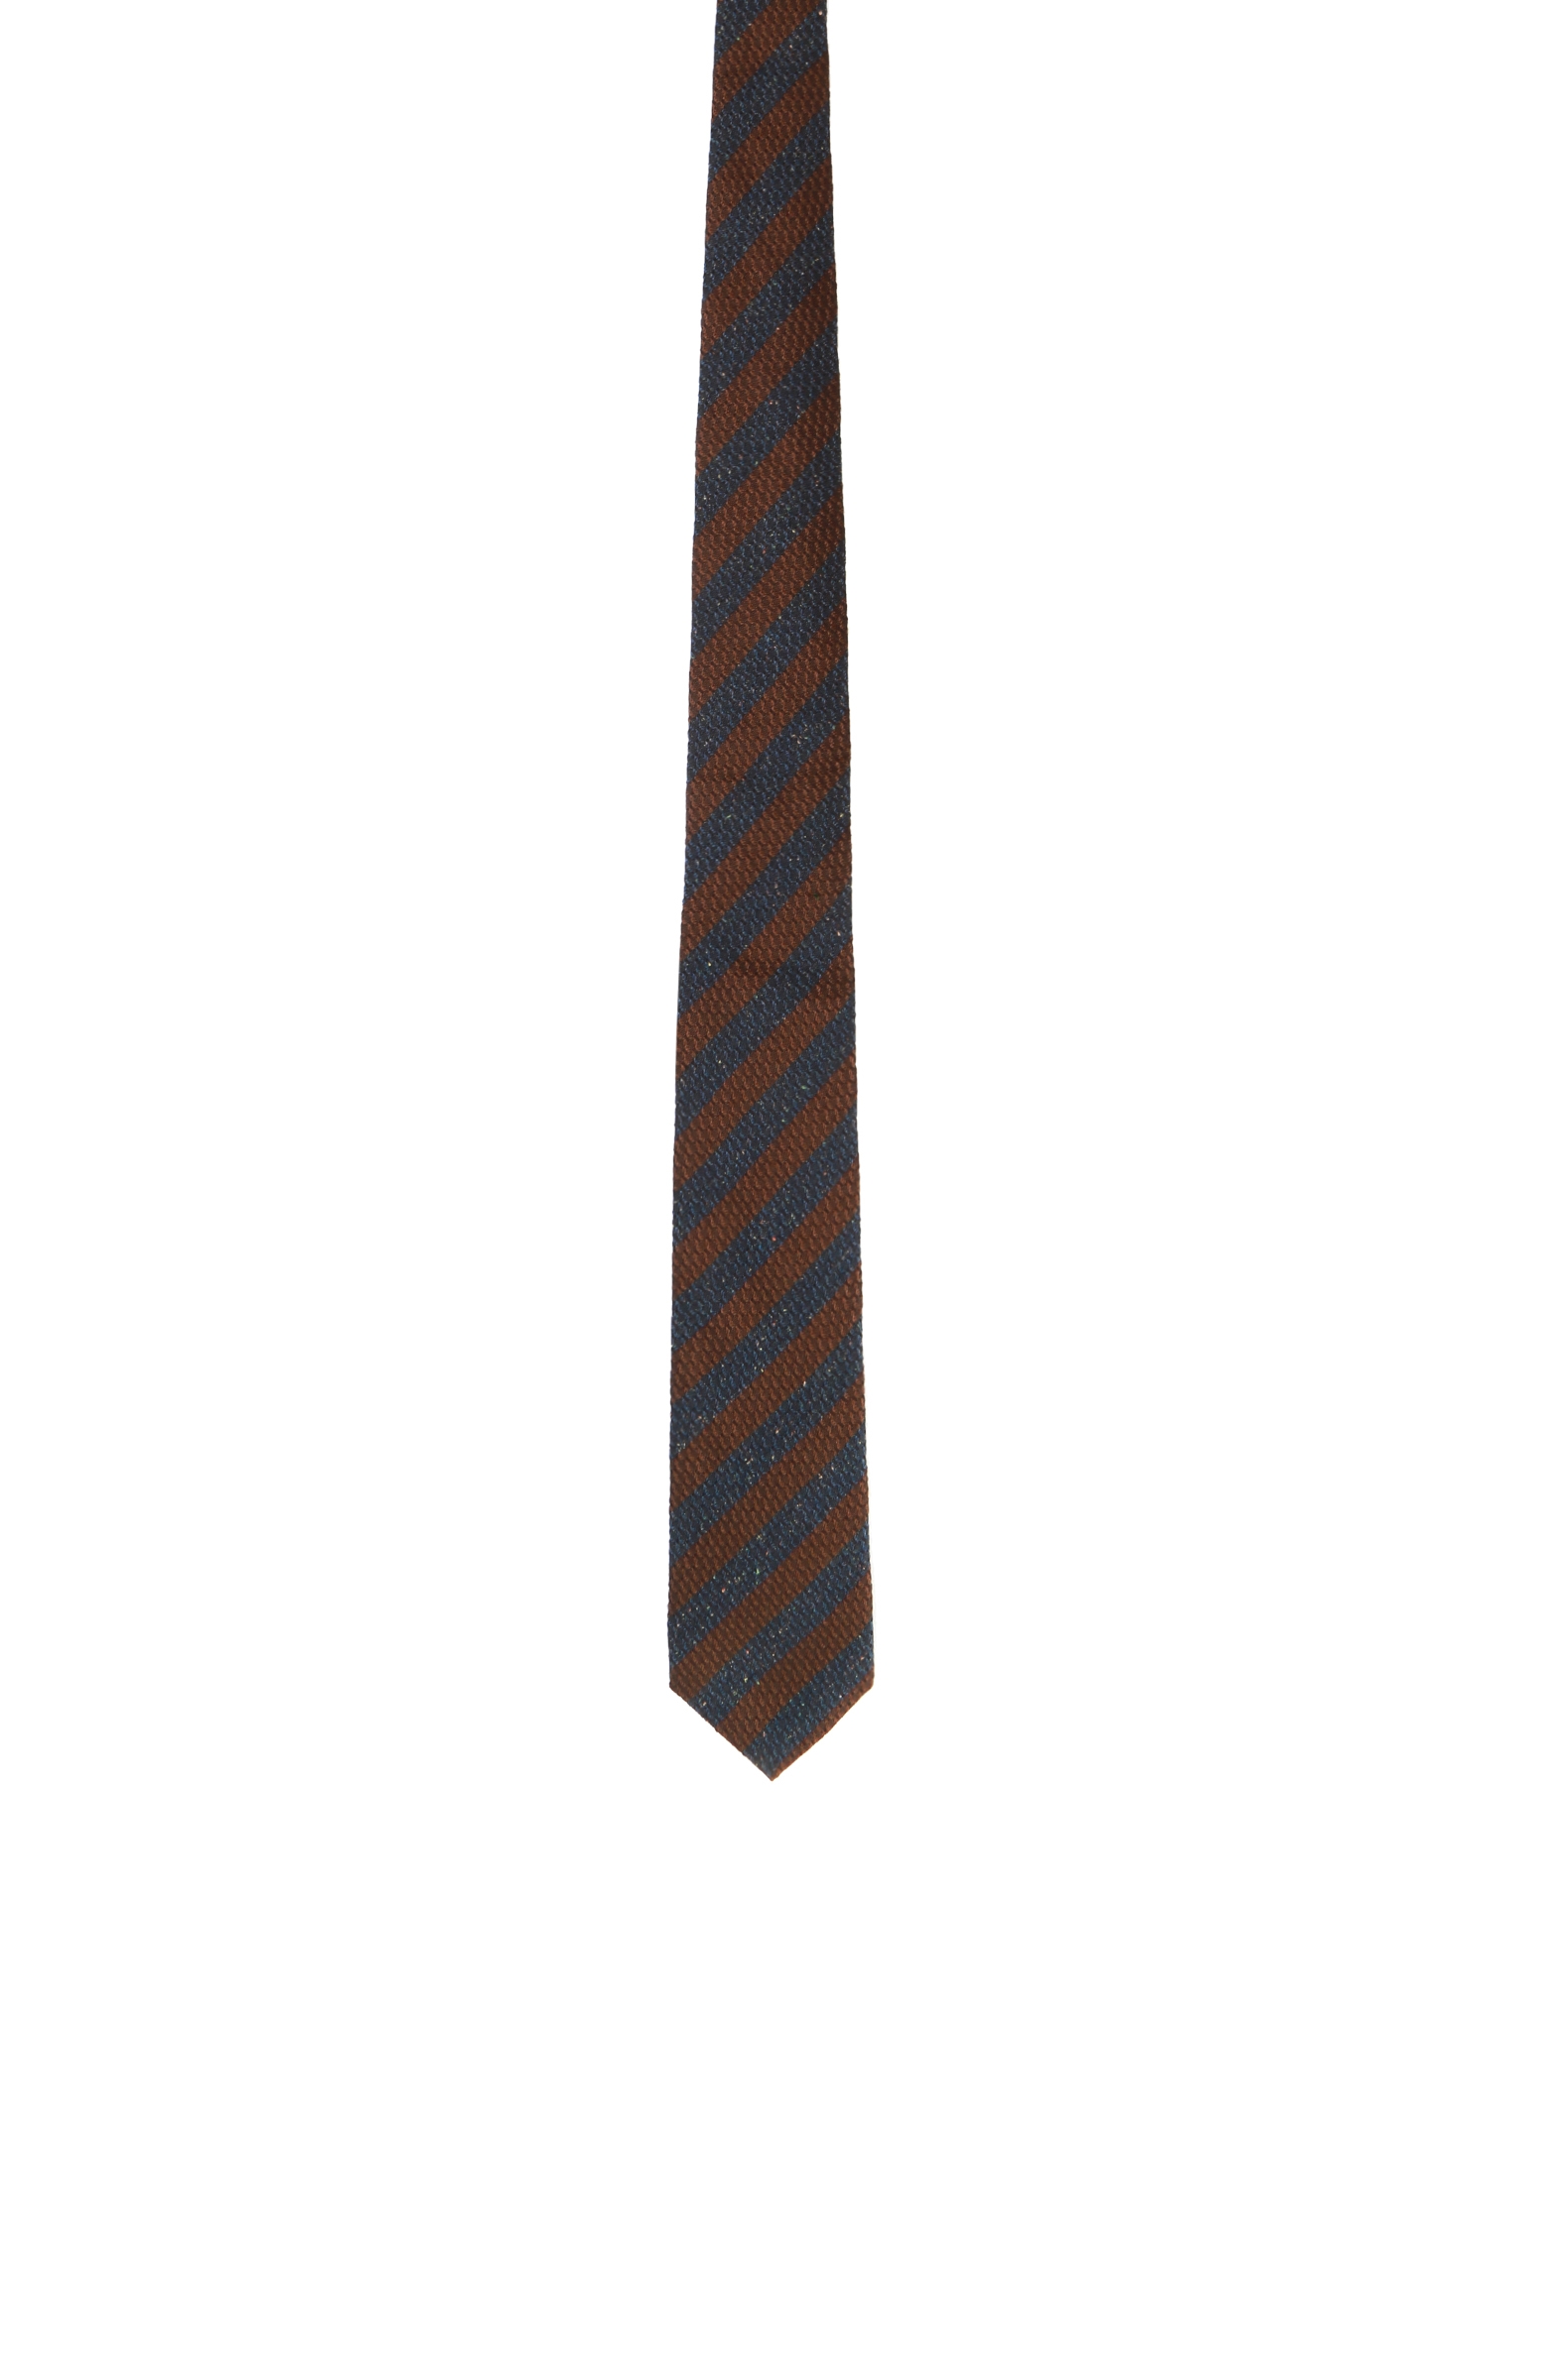 Çizgili Lacivert-Kahverengi Erkek Kravat